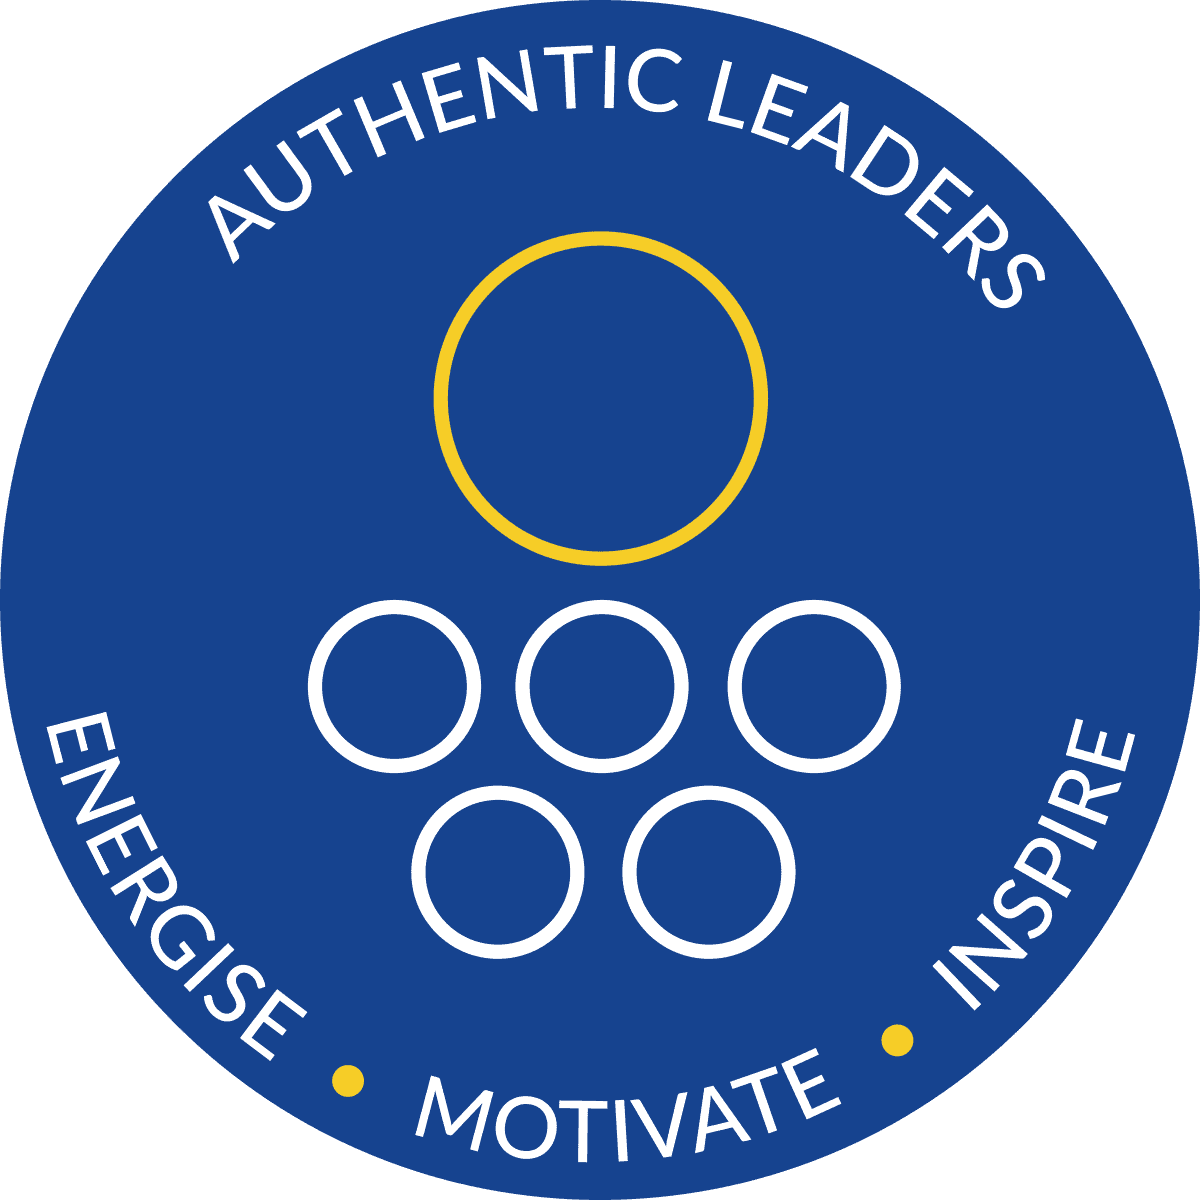 AUTHENTIC LEADERS ENERGISE MOTIVATE INSPIRE